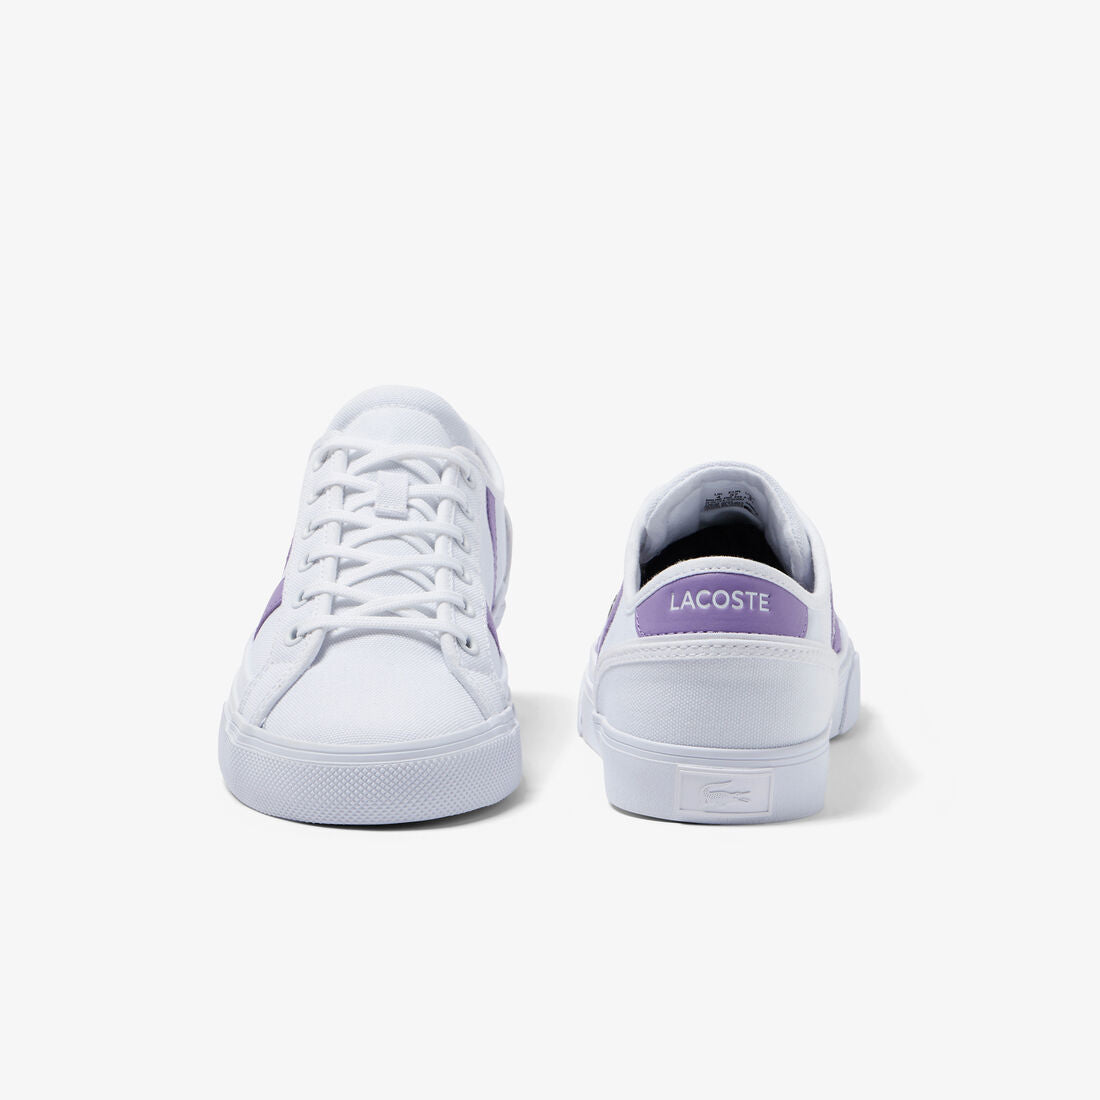 Lacoste - Sideline Pro 222 3 Colour Pop Sneaker - White/Purple